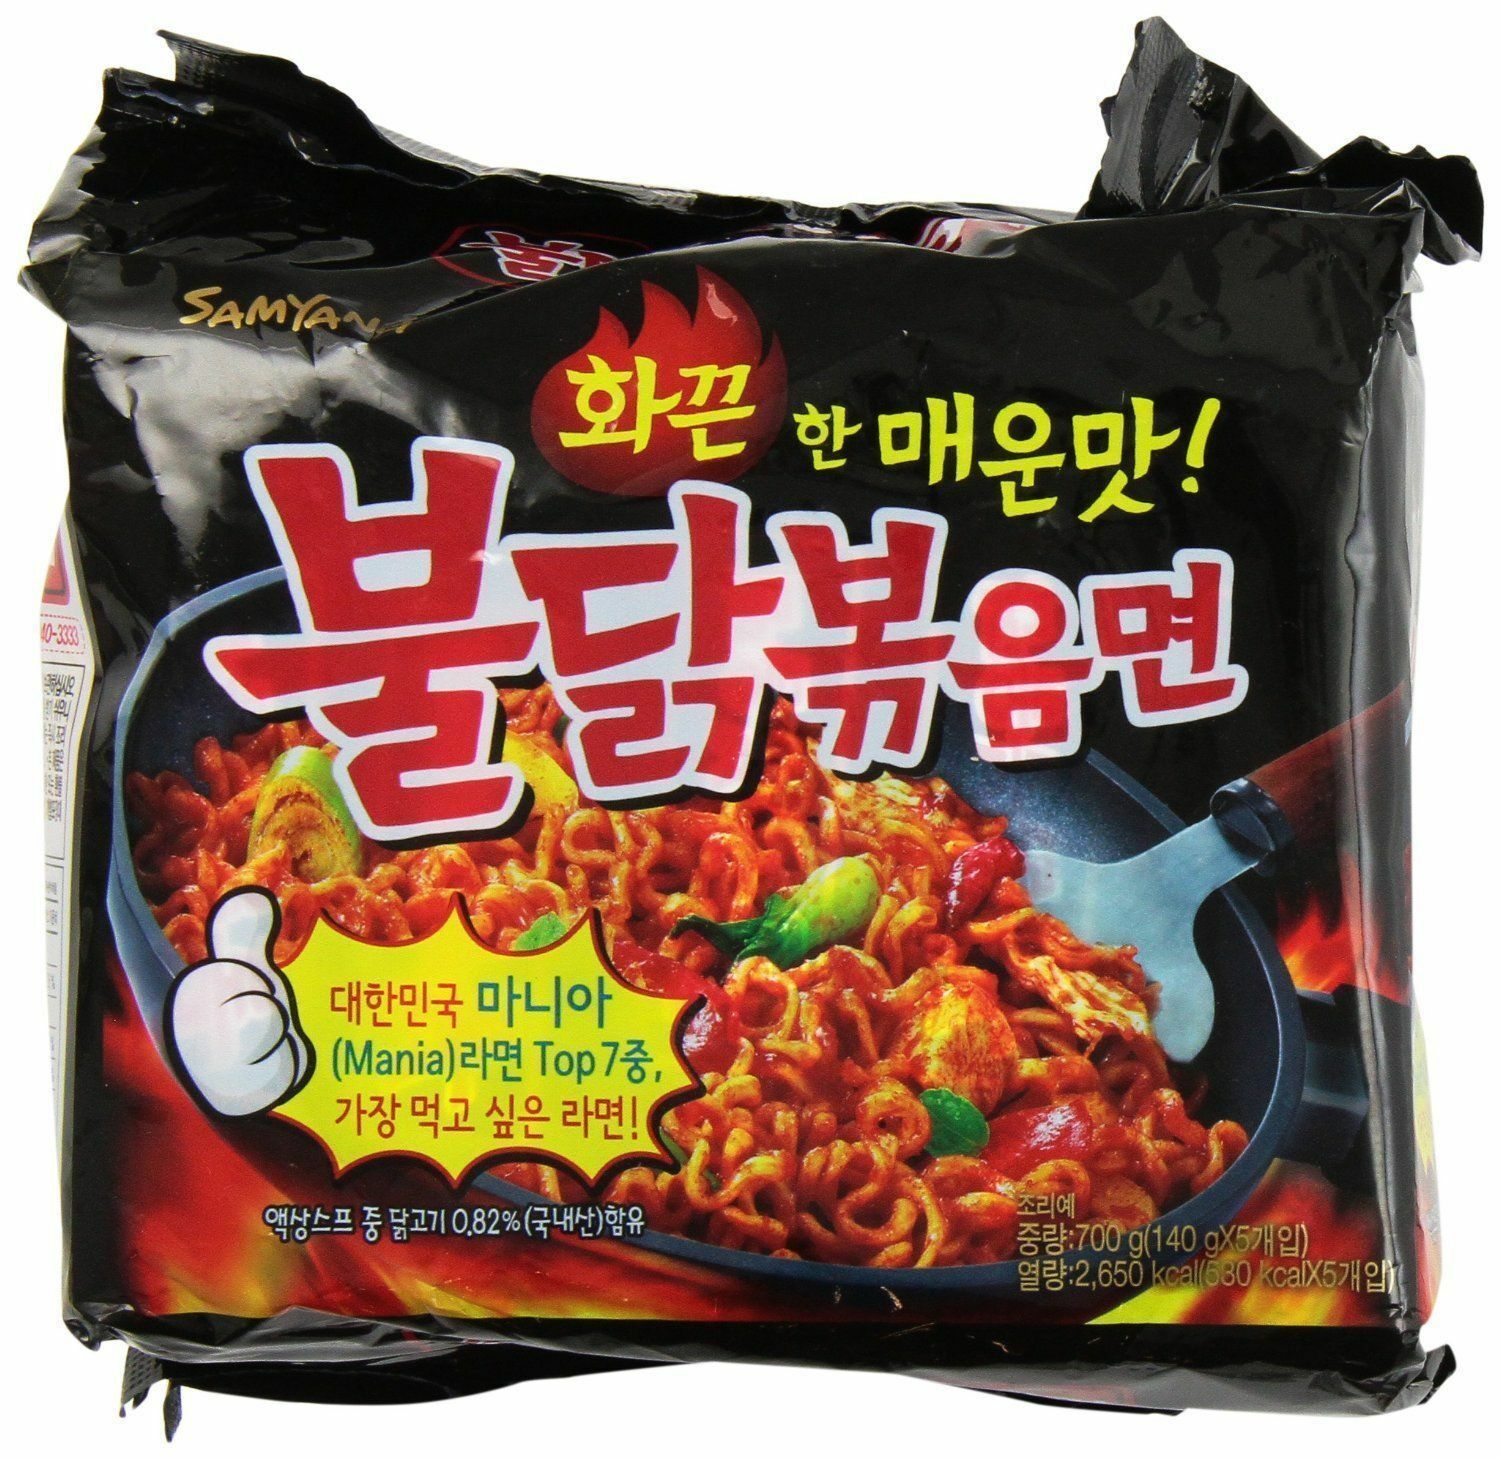 Samyang Korean Fire Noodle Challenge, Extremely Spicy Hot Chicken Flavor Ramen